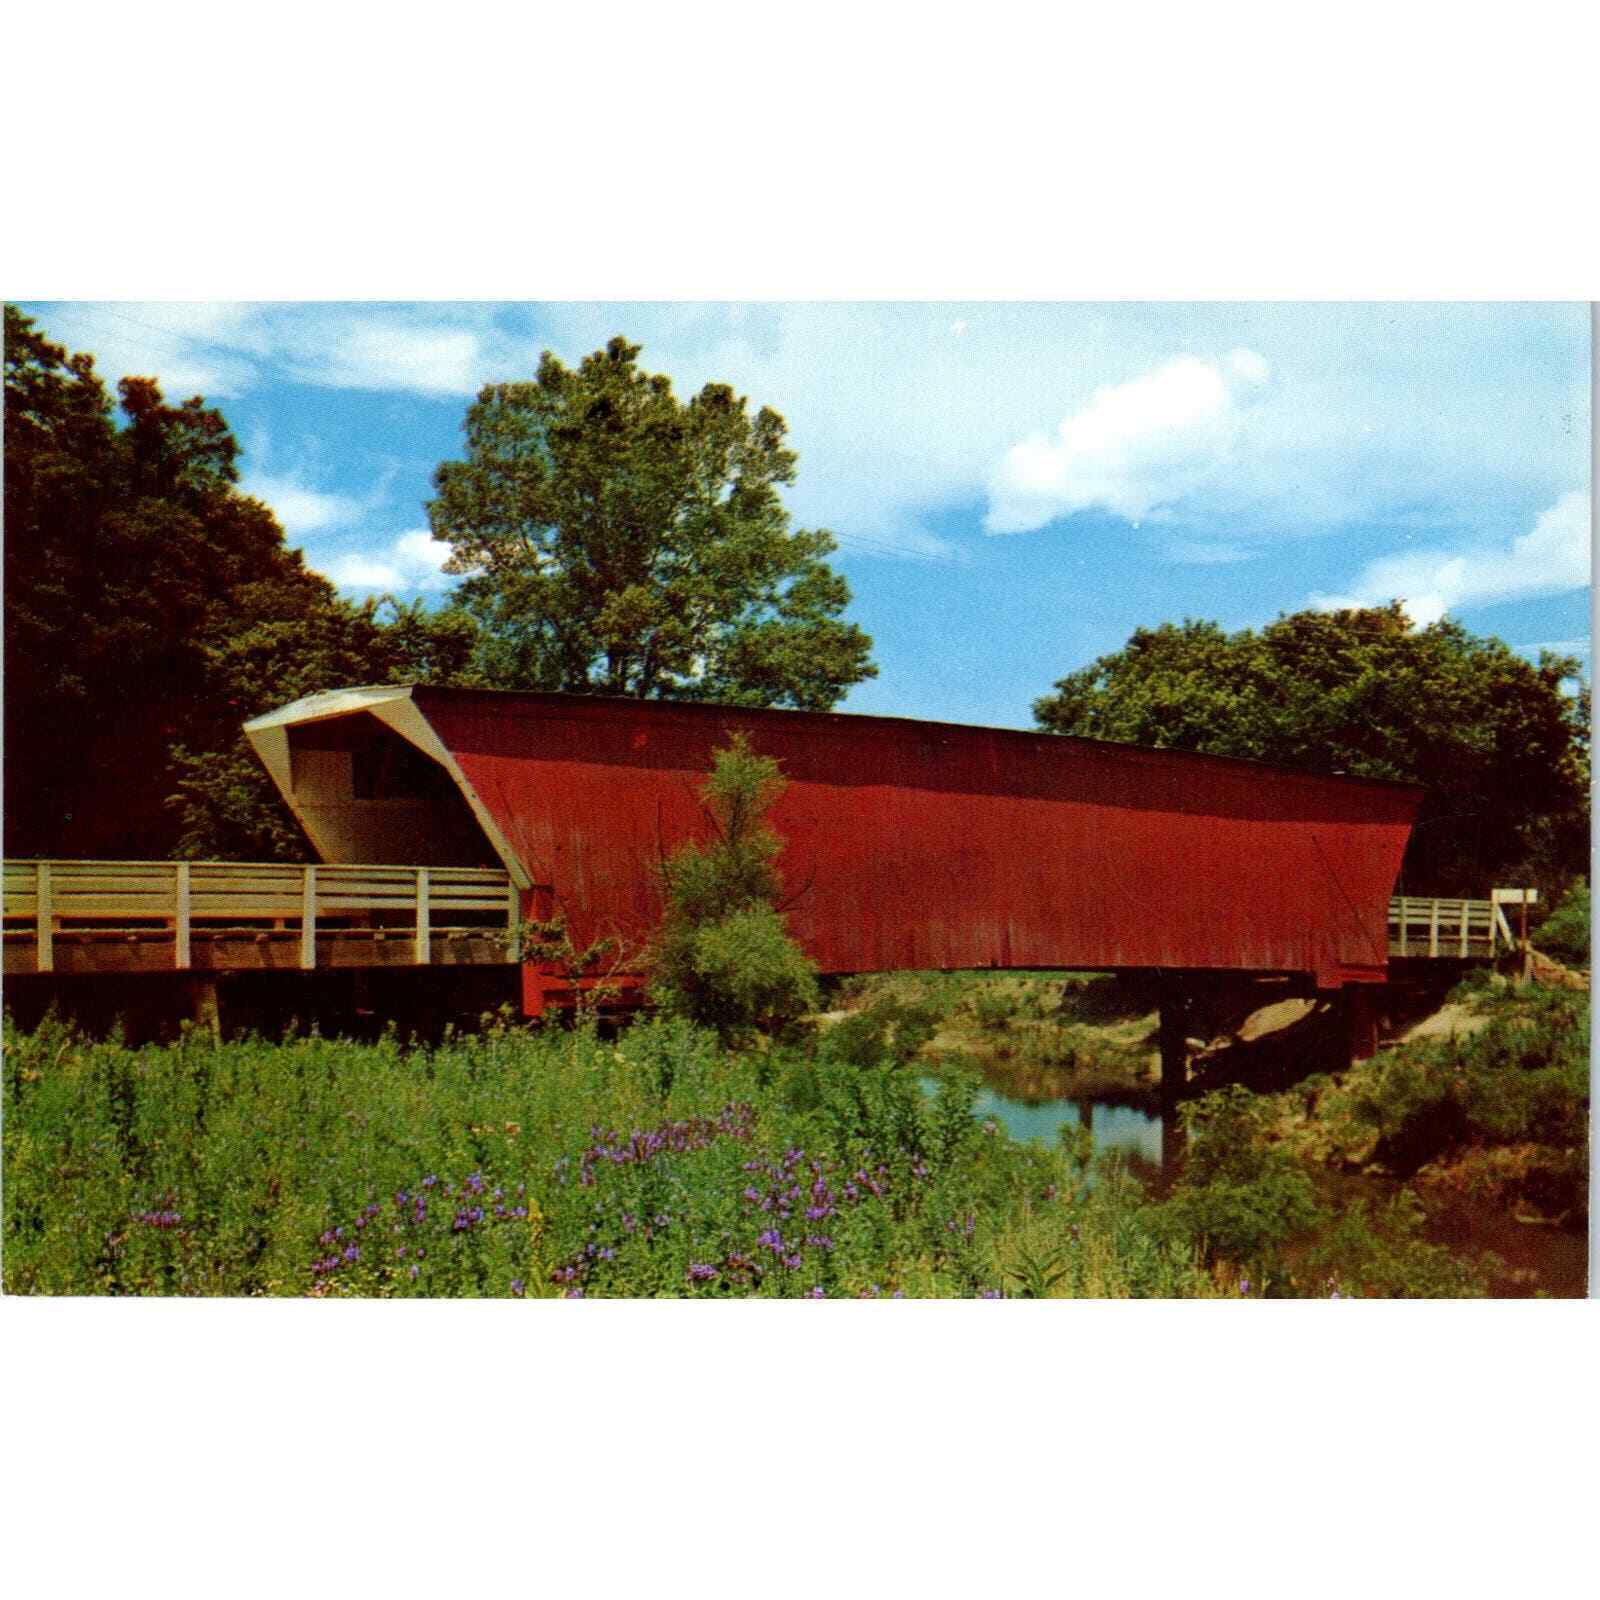 Red Covered Bridge in Winterset Iowa Vintage Covered Bridge Postcard PD3